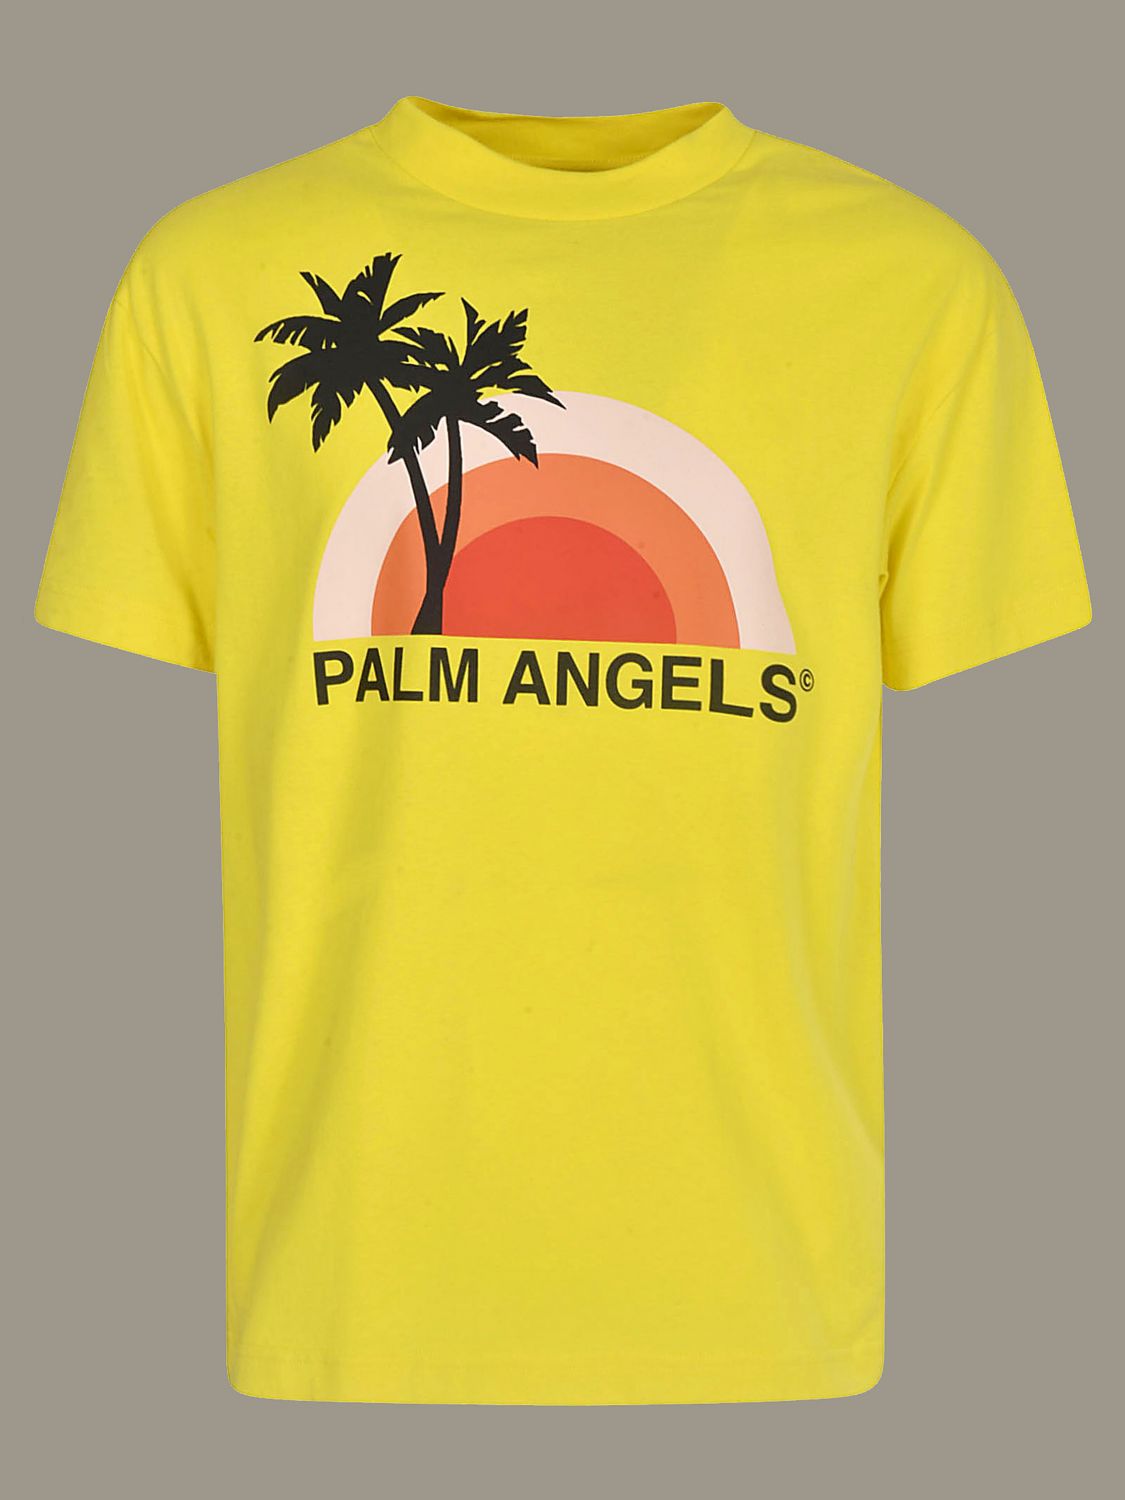 palm angels t shirt palm tree